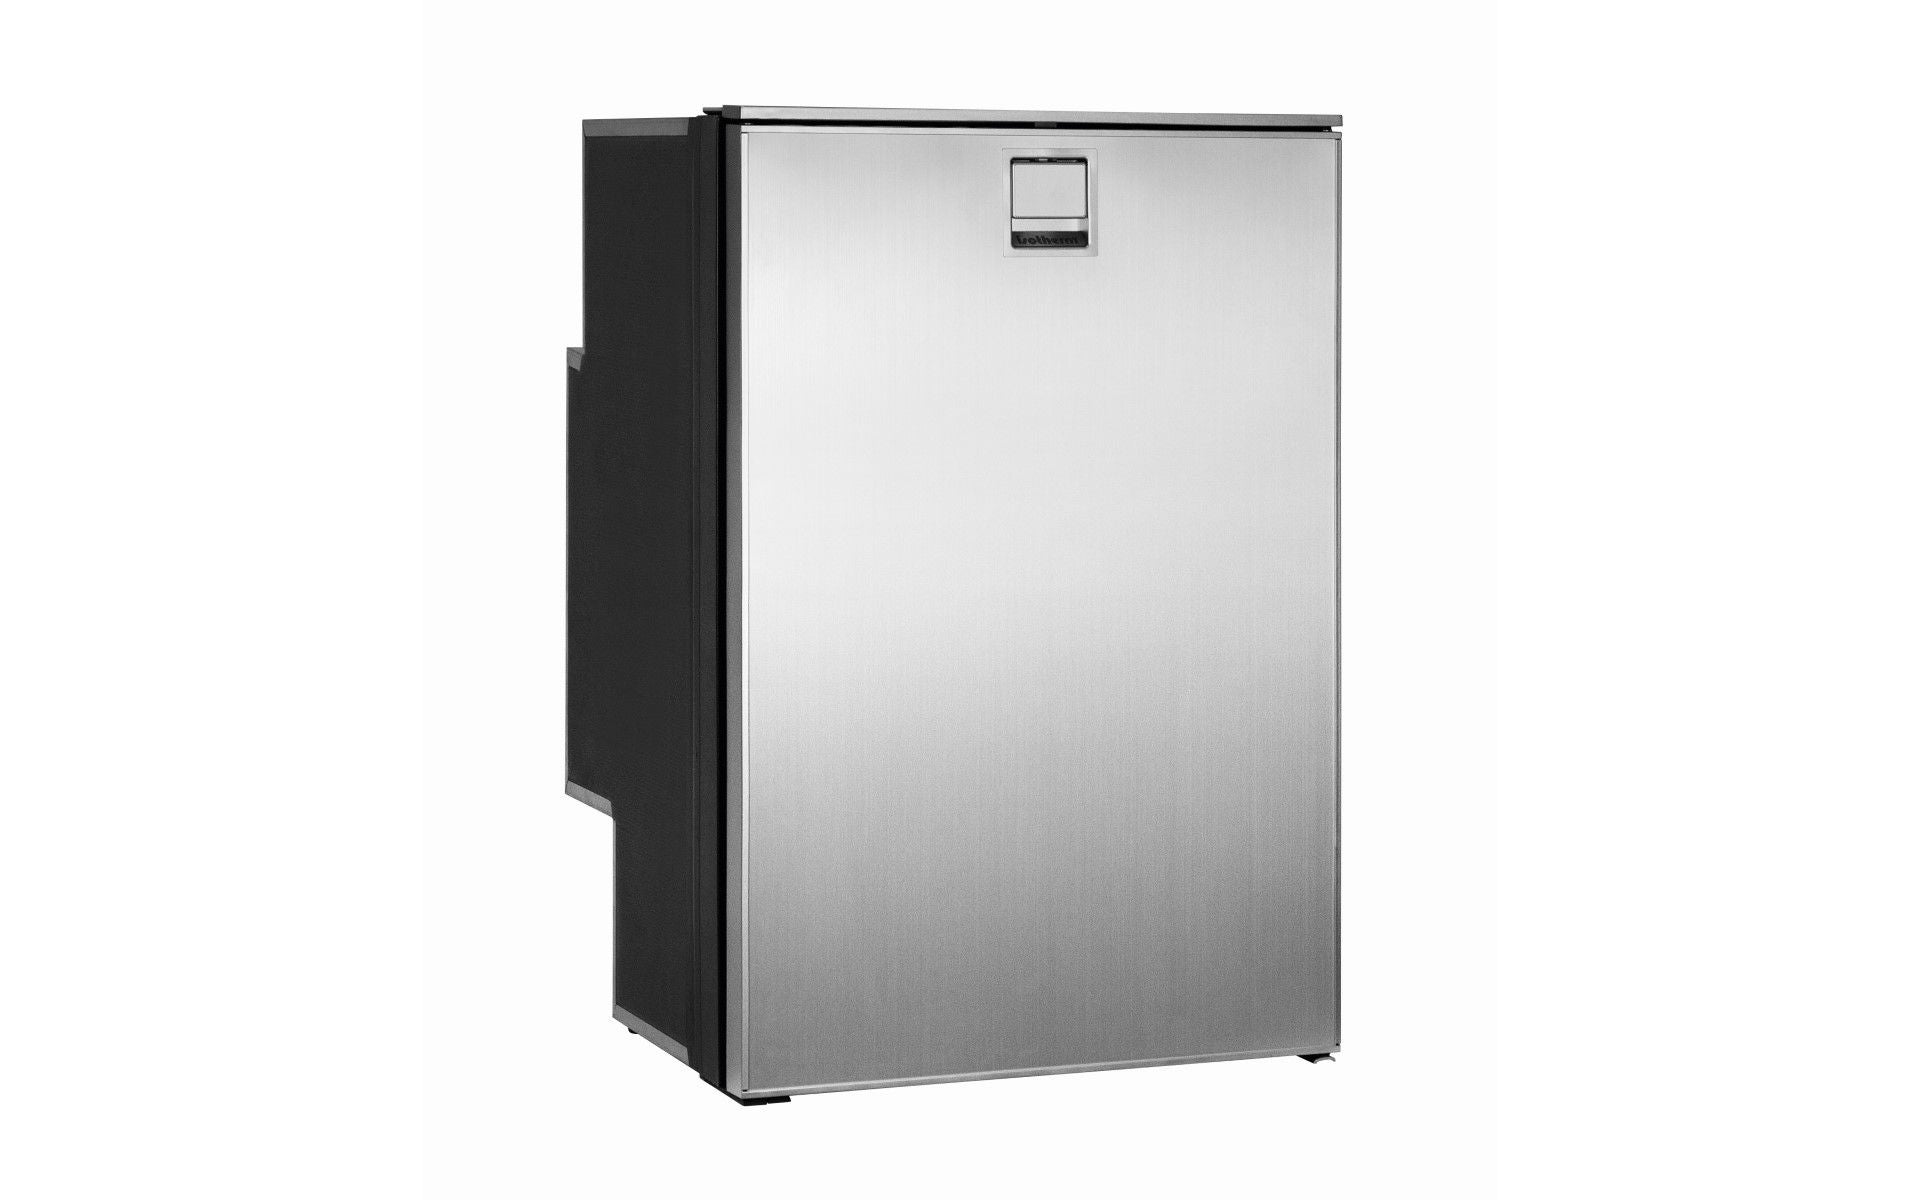 Product picture of Freeline 115 Elegance fridge with closed door